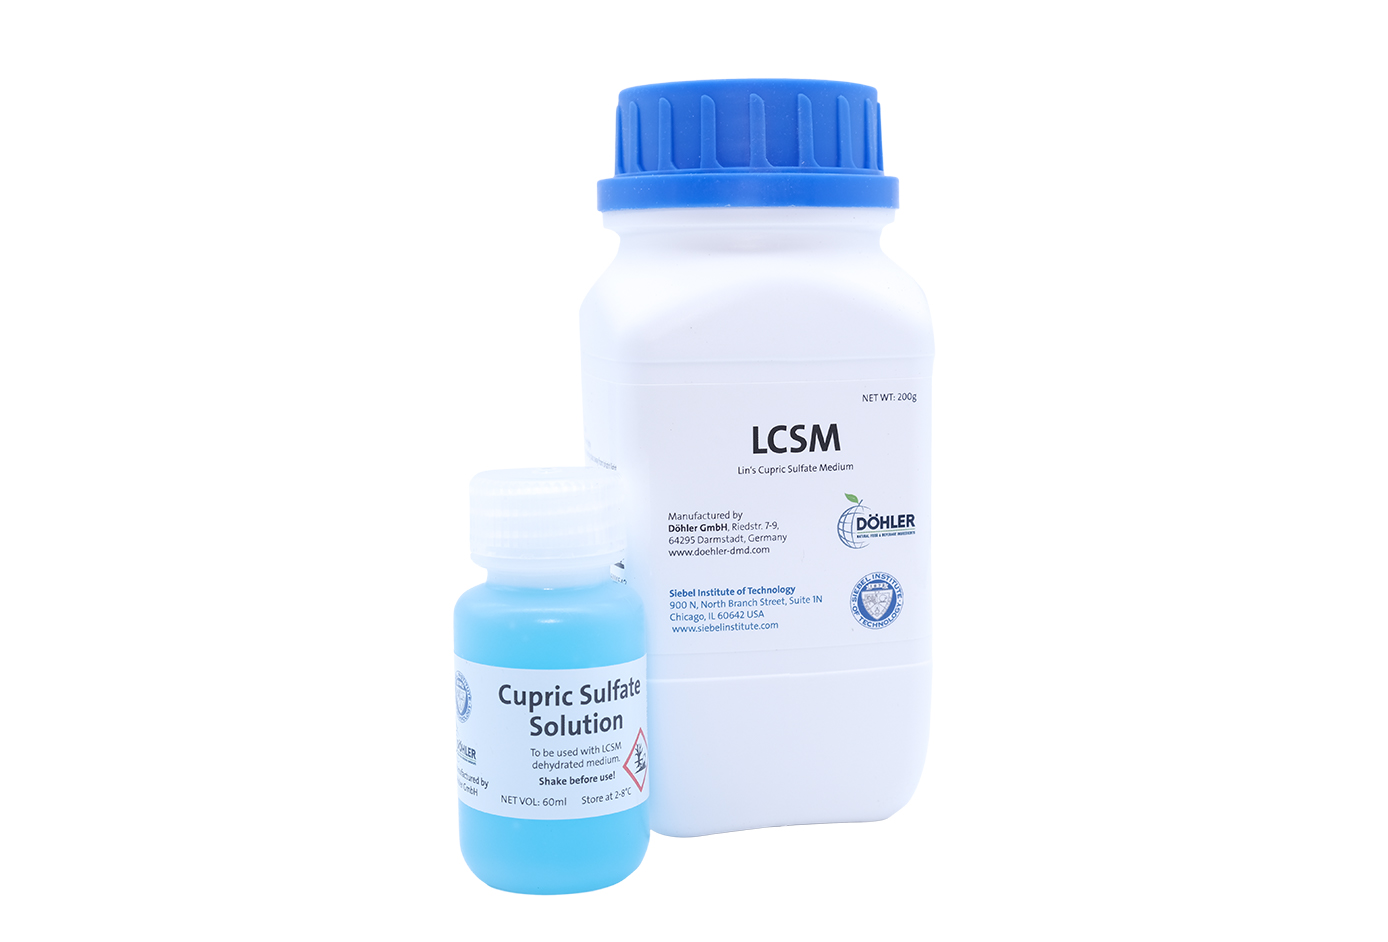 Lin's Cupric Sulfate Medium(LCSM) Media with Cupric Sulfate Solution